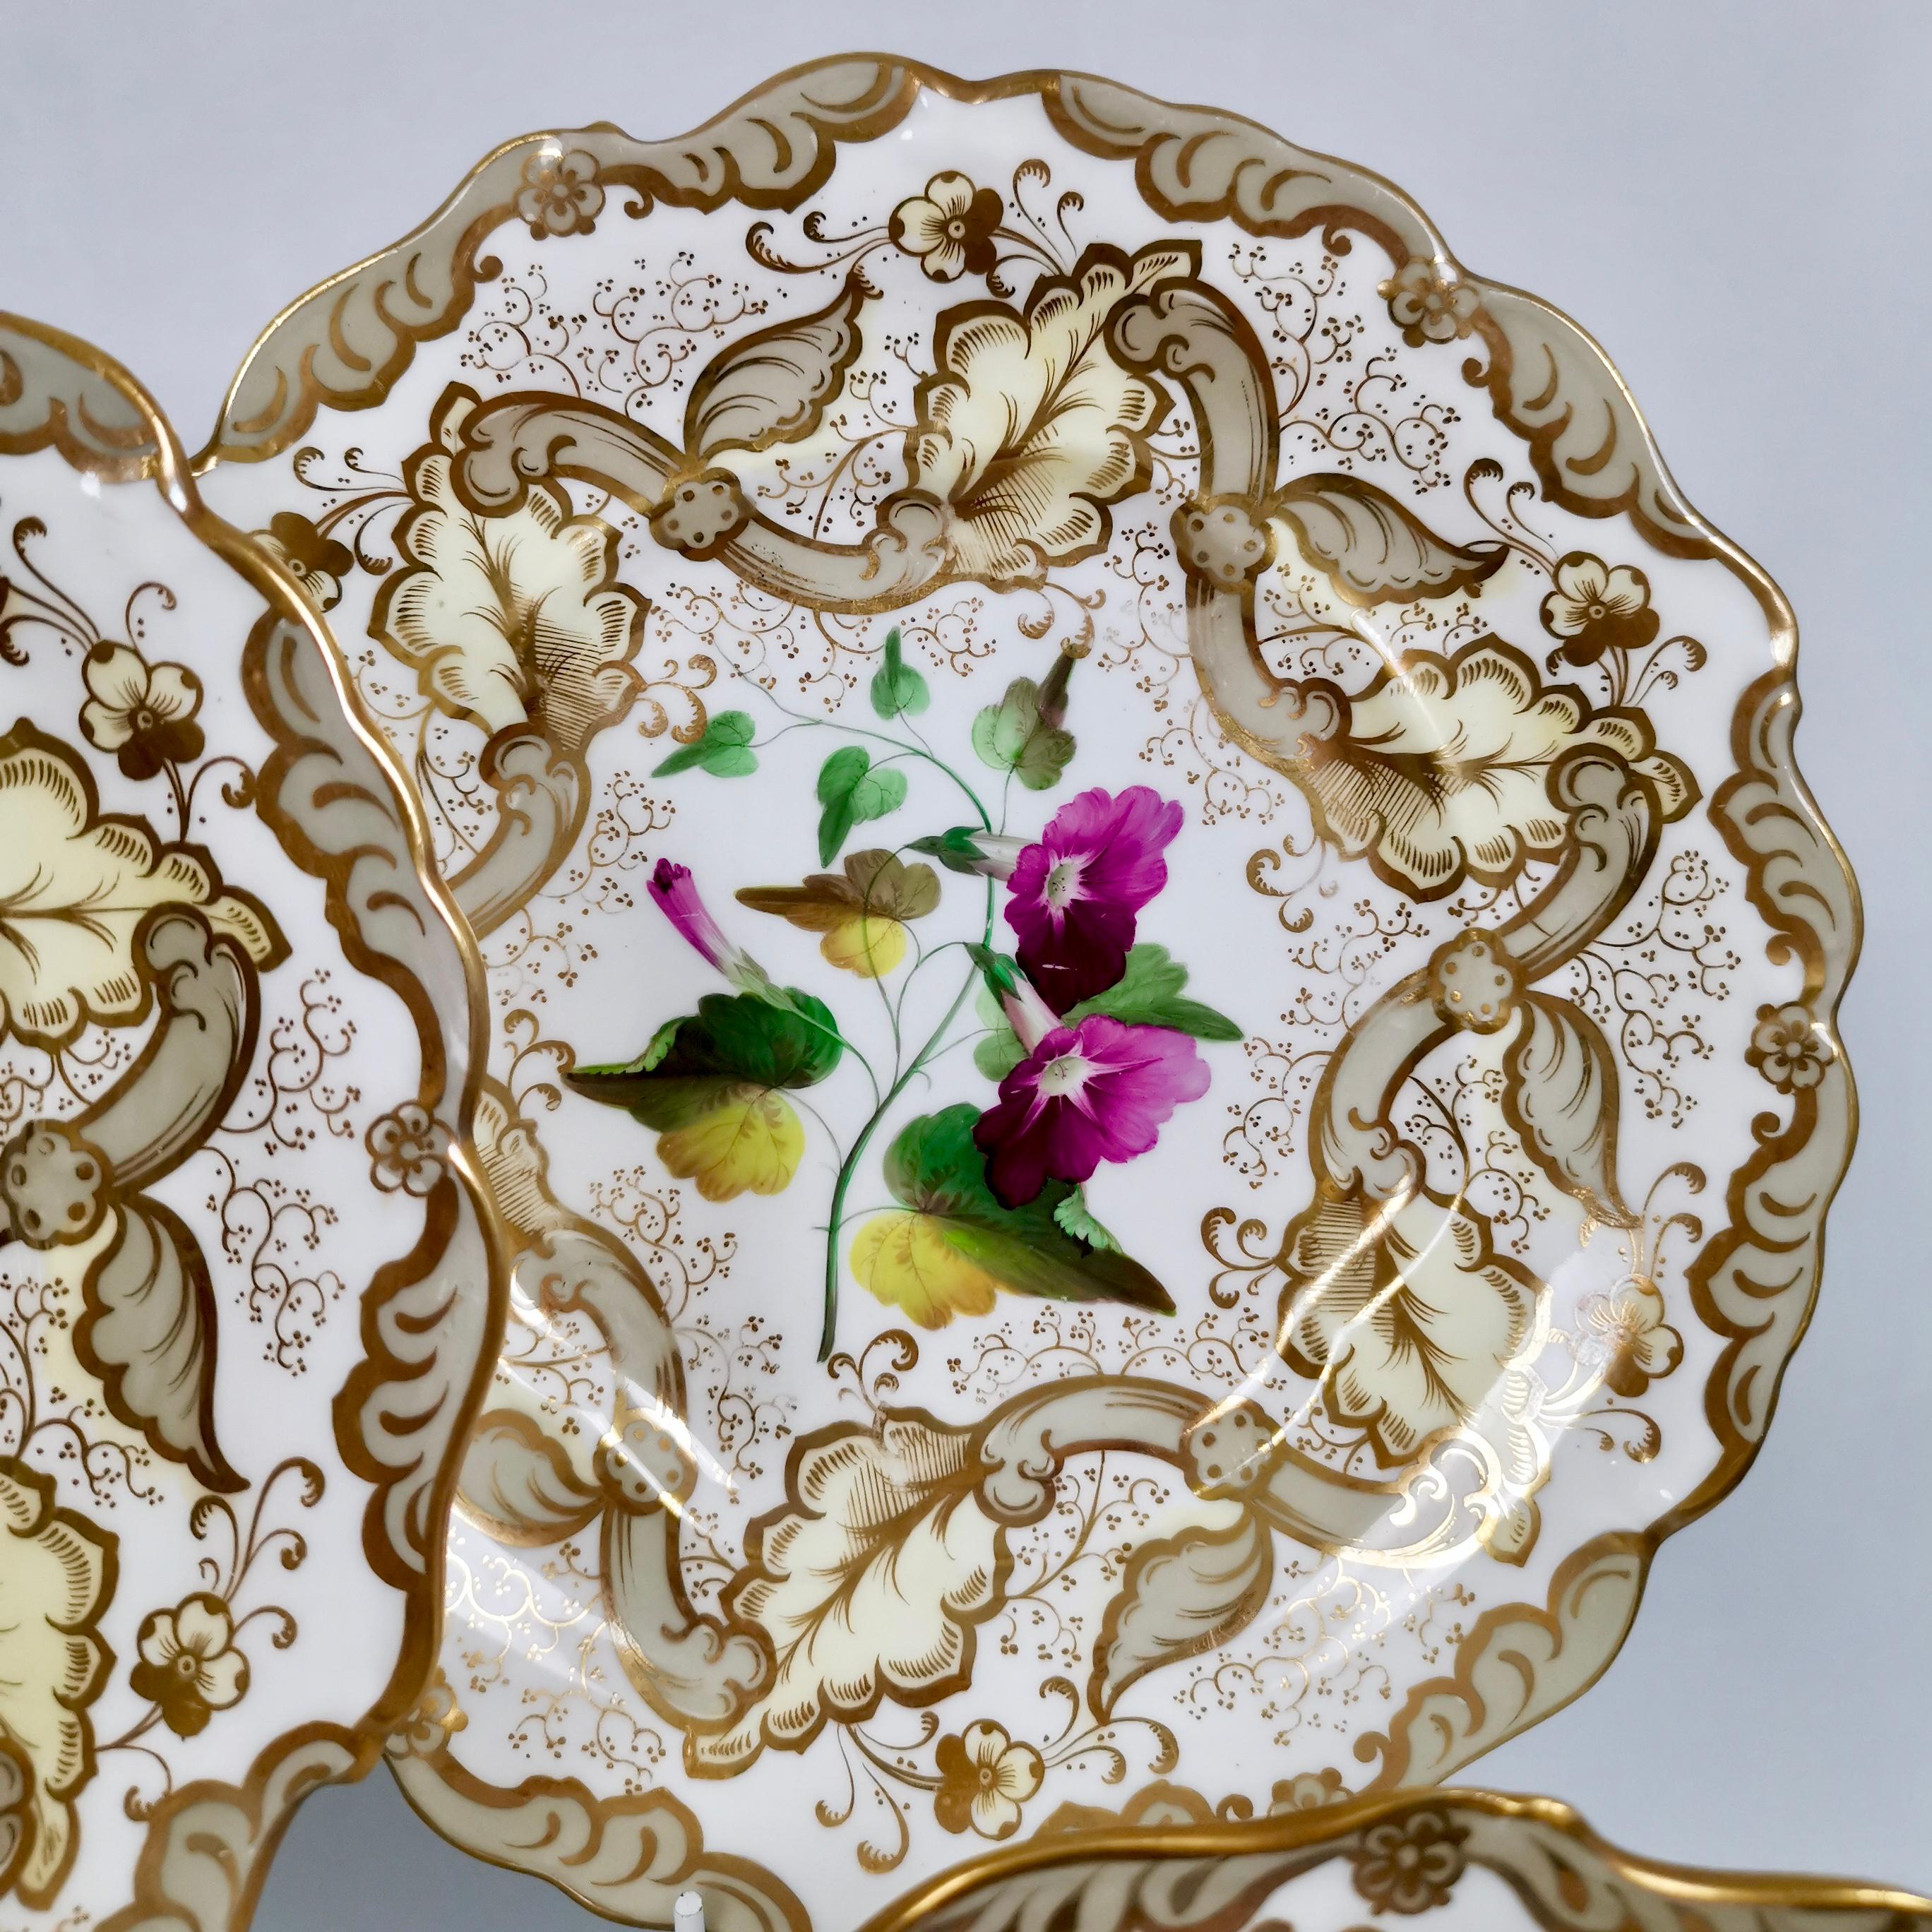 Rococo Revival Samuel Alcock Set of 8 Dessert Plates, Superb Flowers, 1835-1840